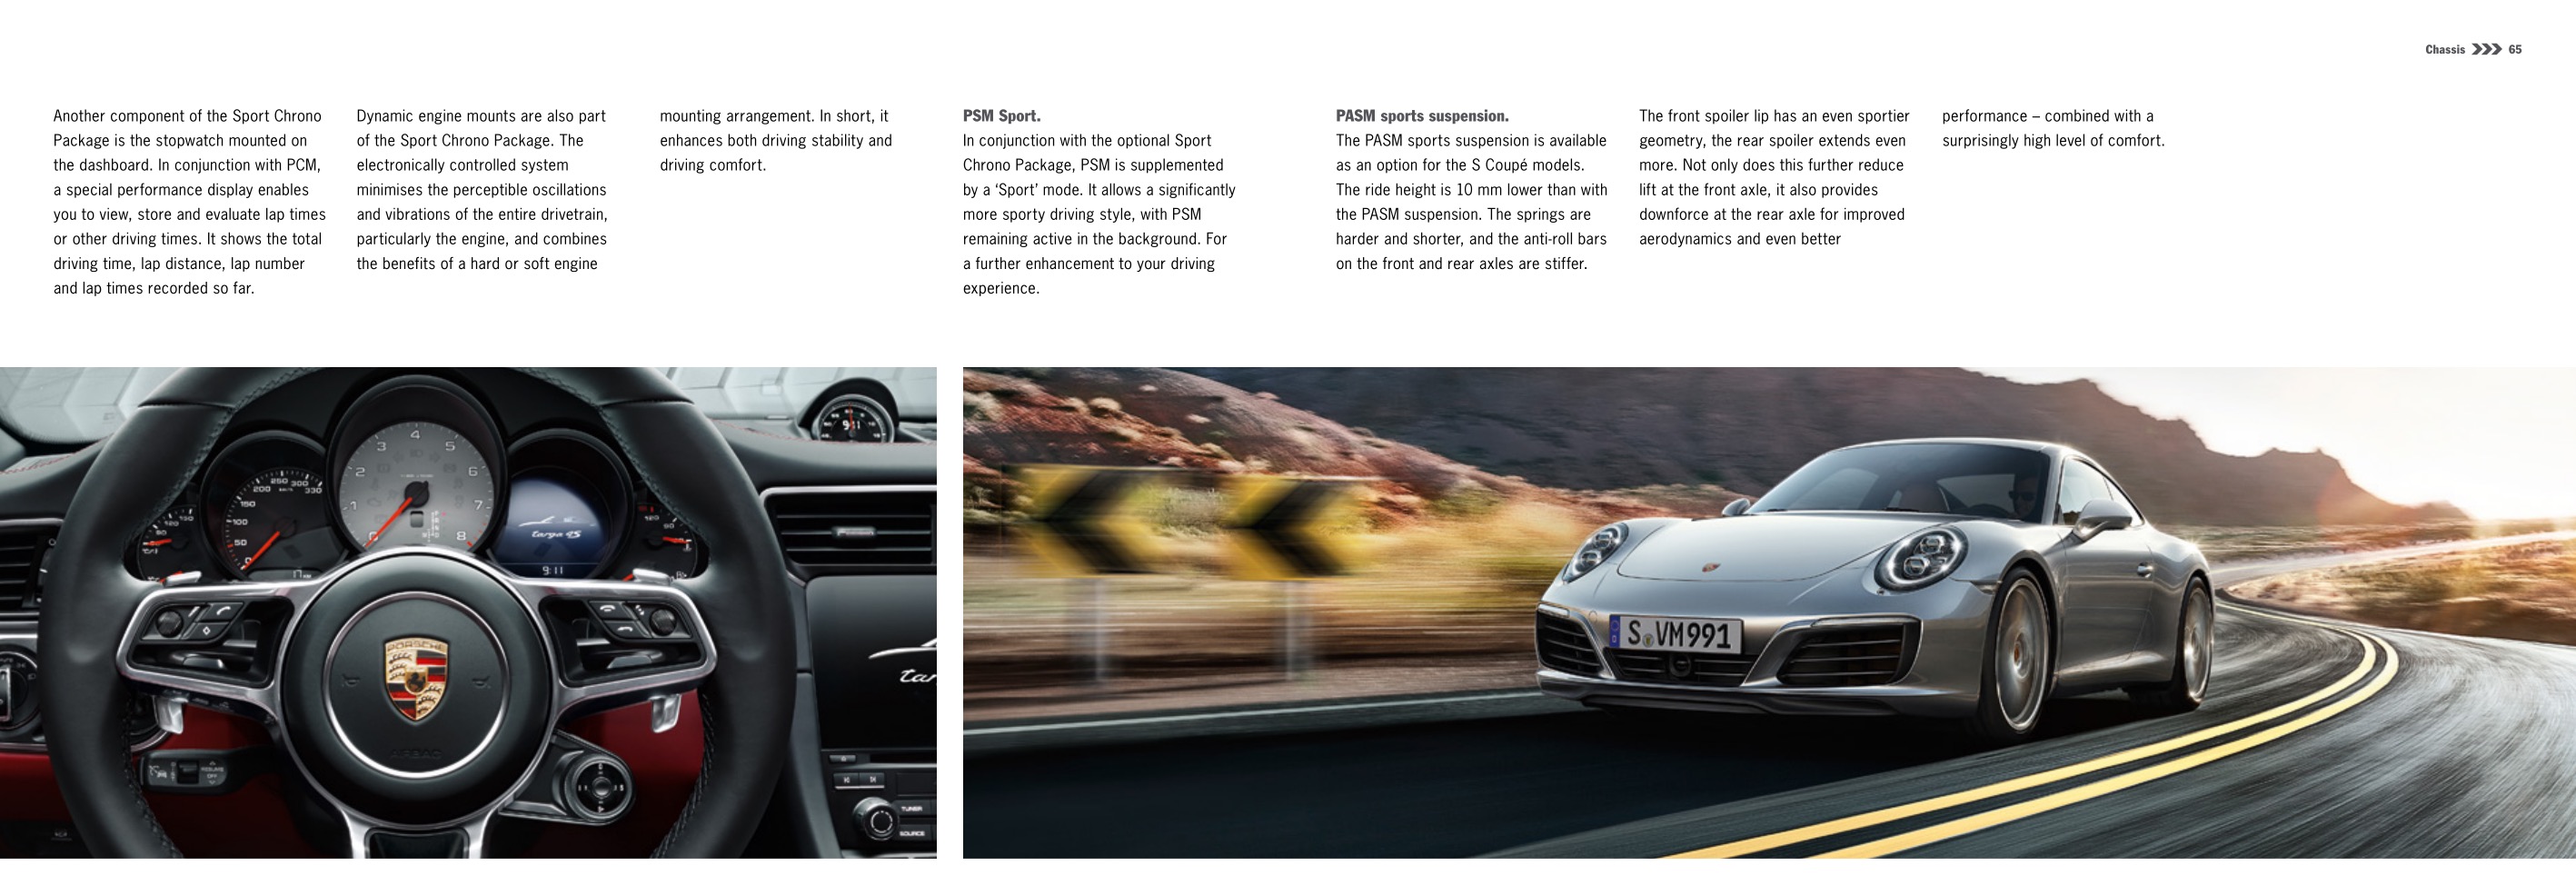 2017 Porsche 911 Brochure Page 51